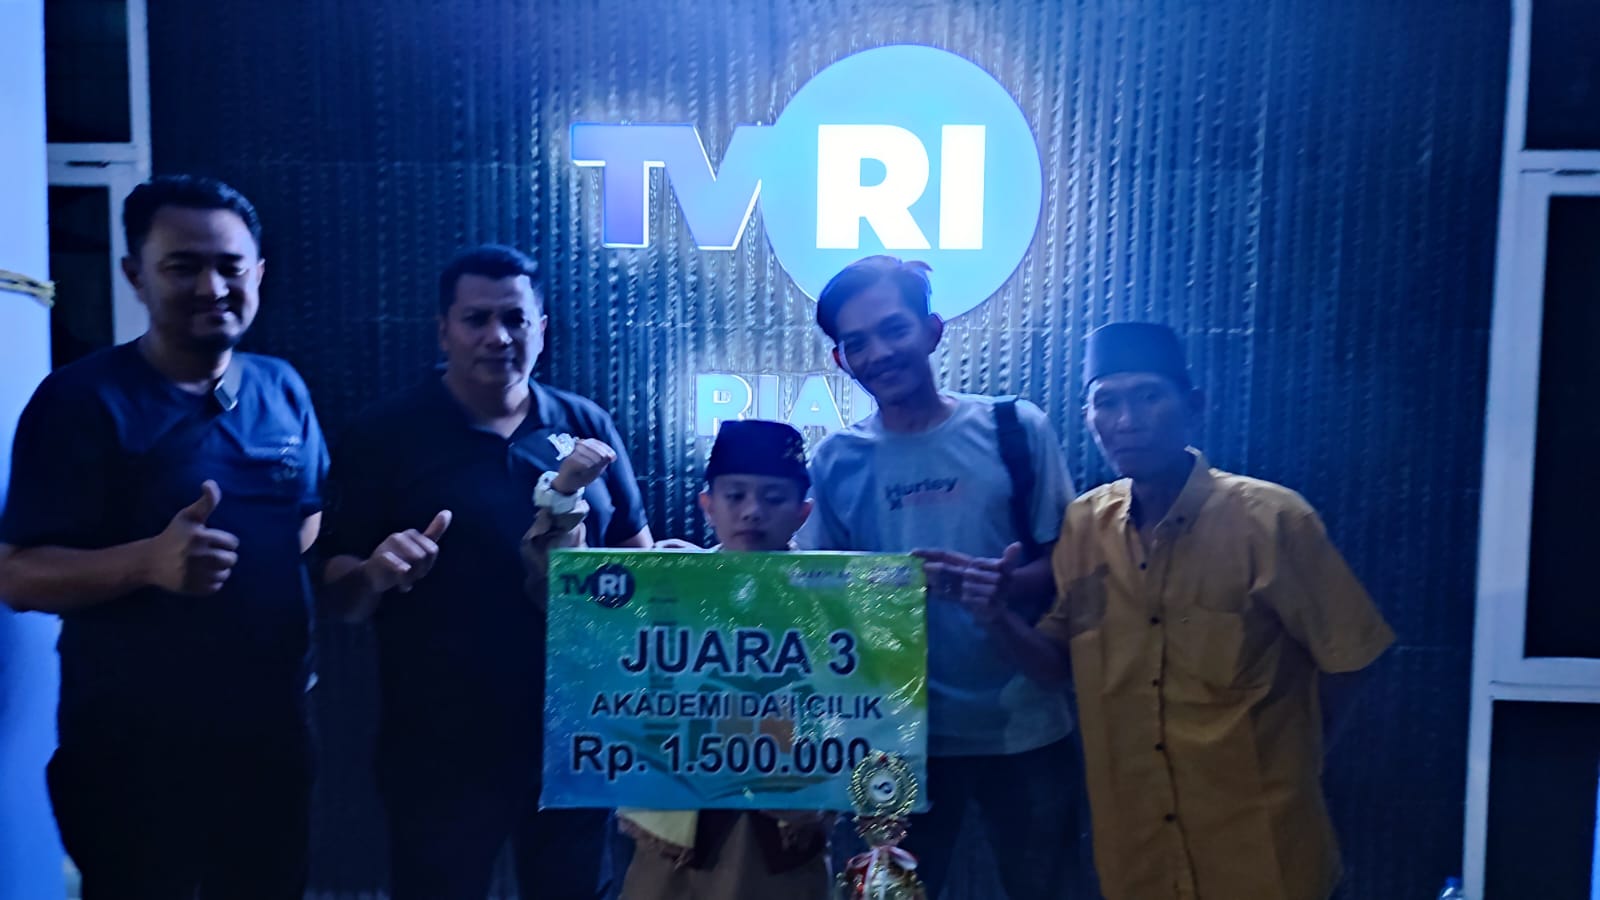 Siswa SD Muhammadiyah Kuok Juara 3 Akademi Da'i Cilik TVRI, Ardo Beri Selamat